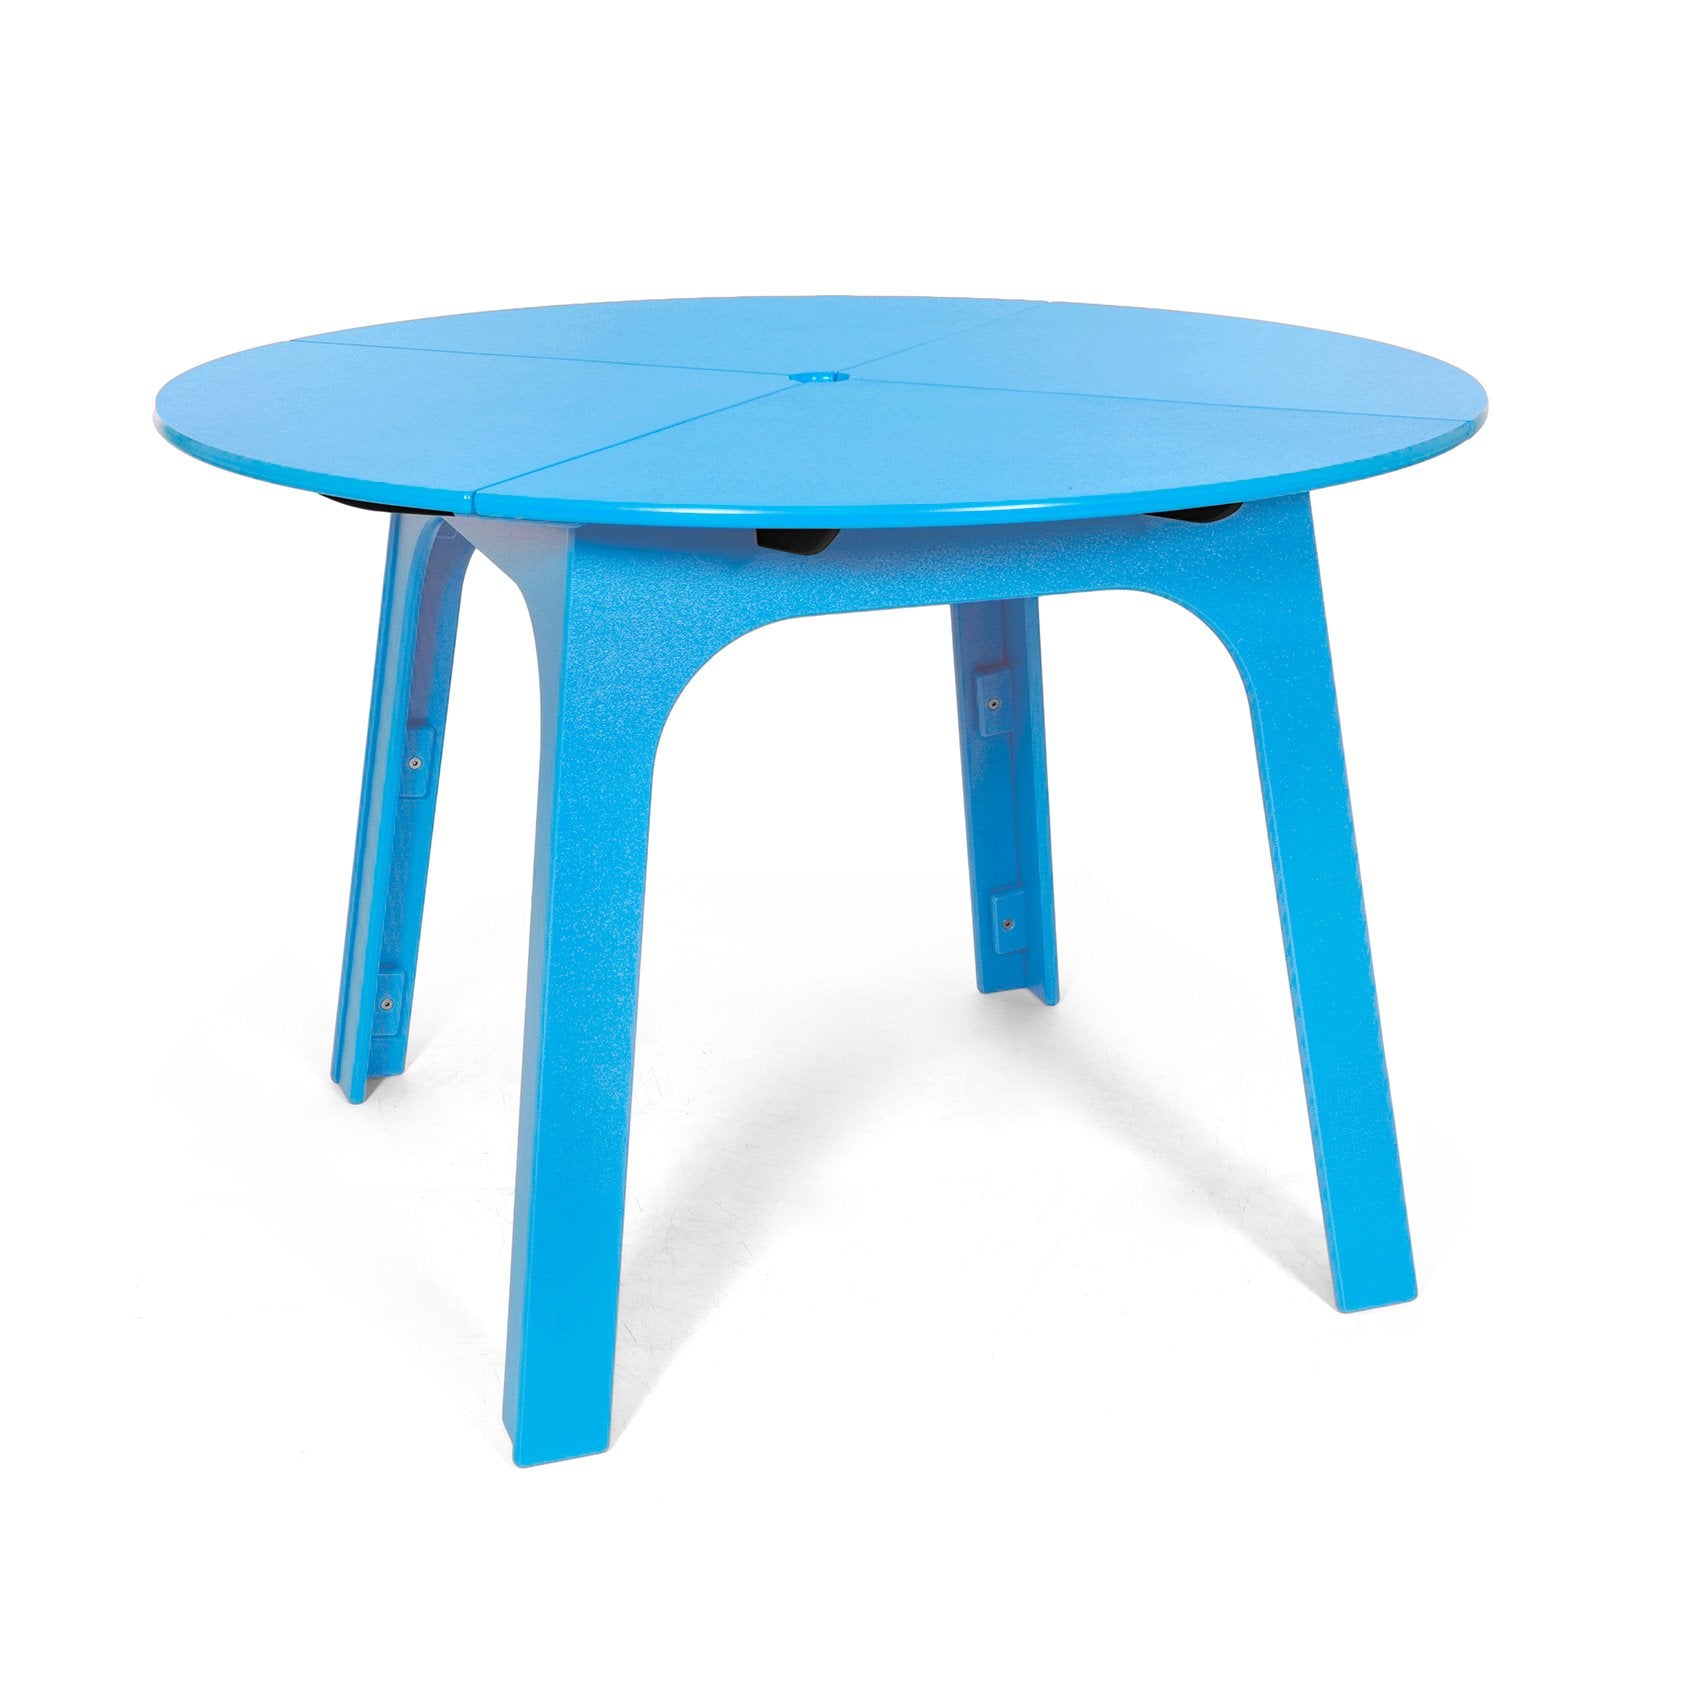 Alfresco Round Table (44 inch)